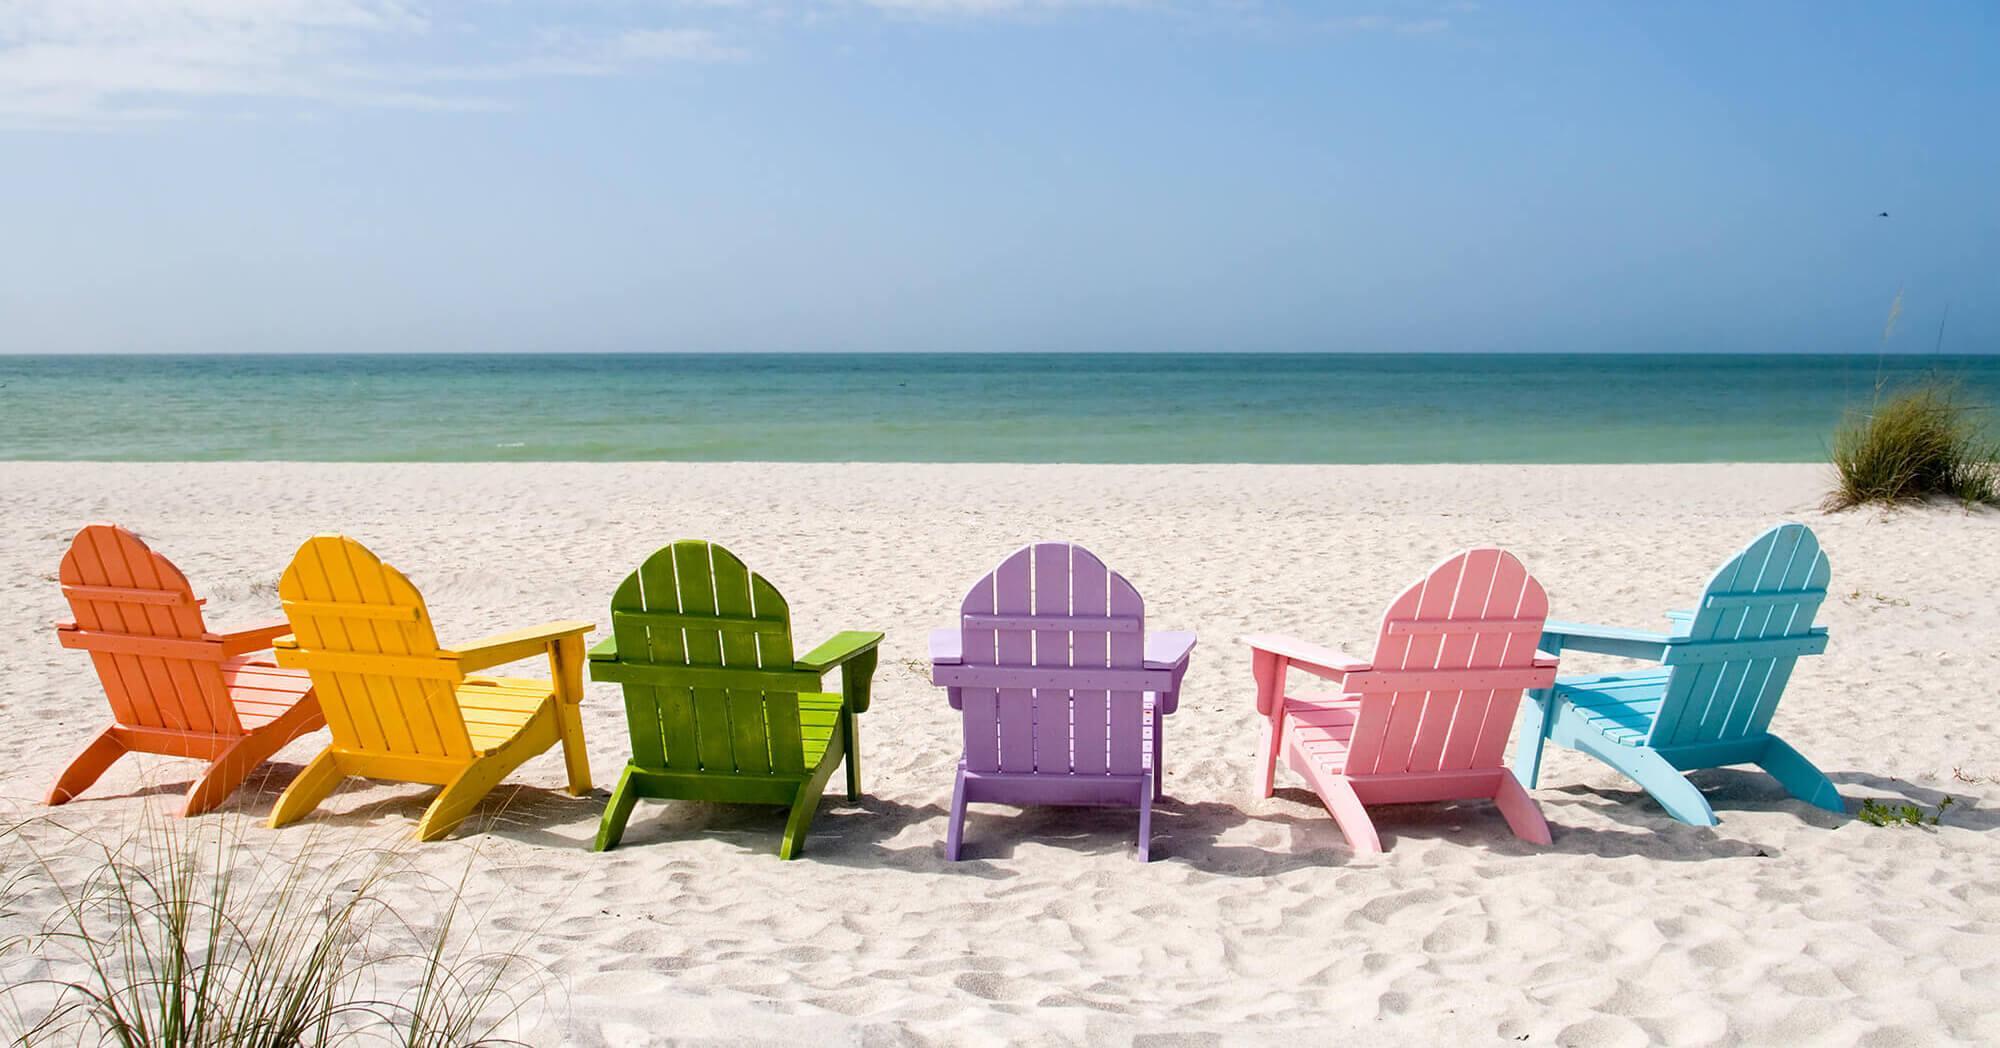 Gulf Coast Homes Condos For Sale 30a Fl Panama City Beach